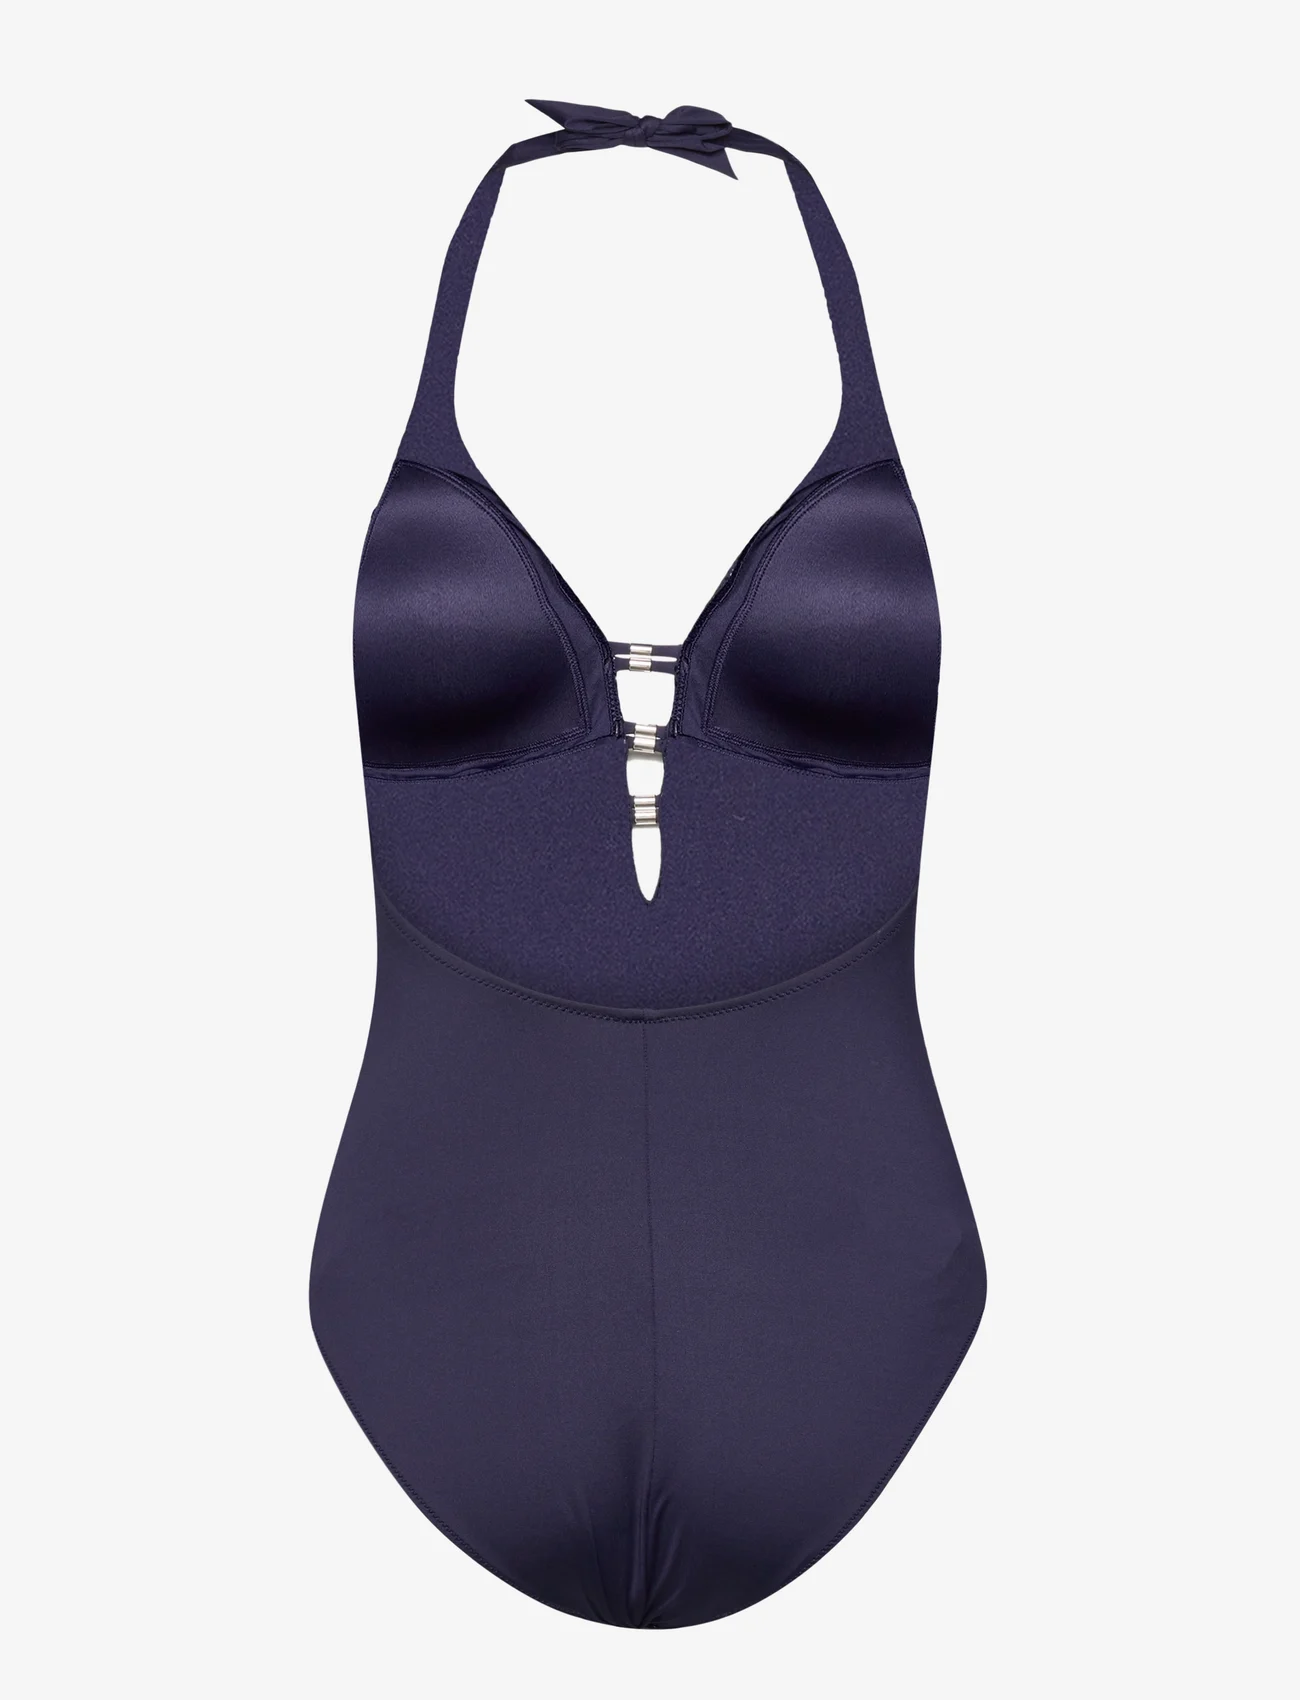 Marie Jo - SAN DOMINO swimsuit - moterims - evening blue - 1